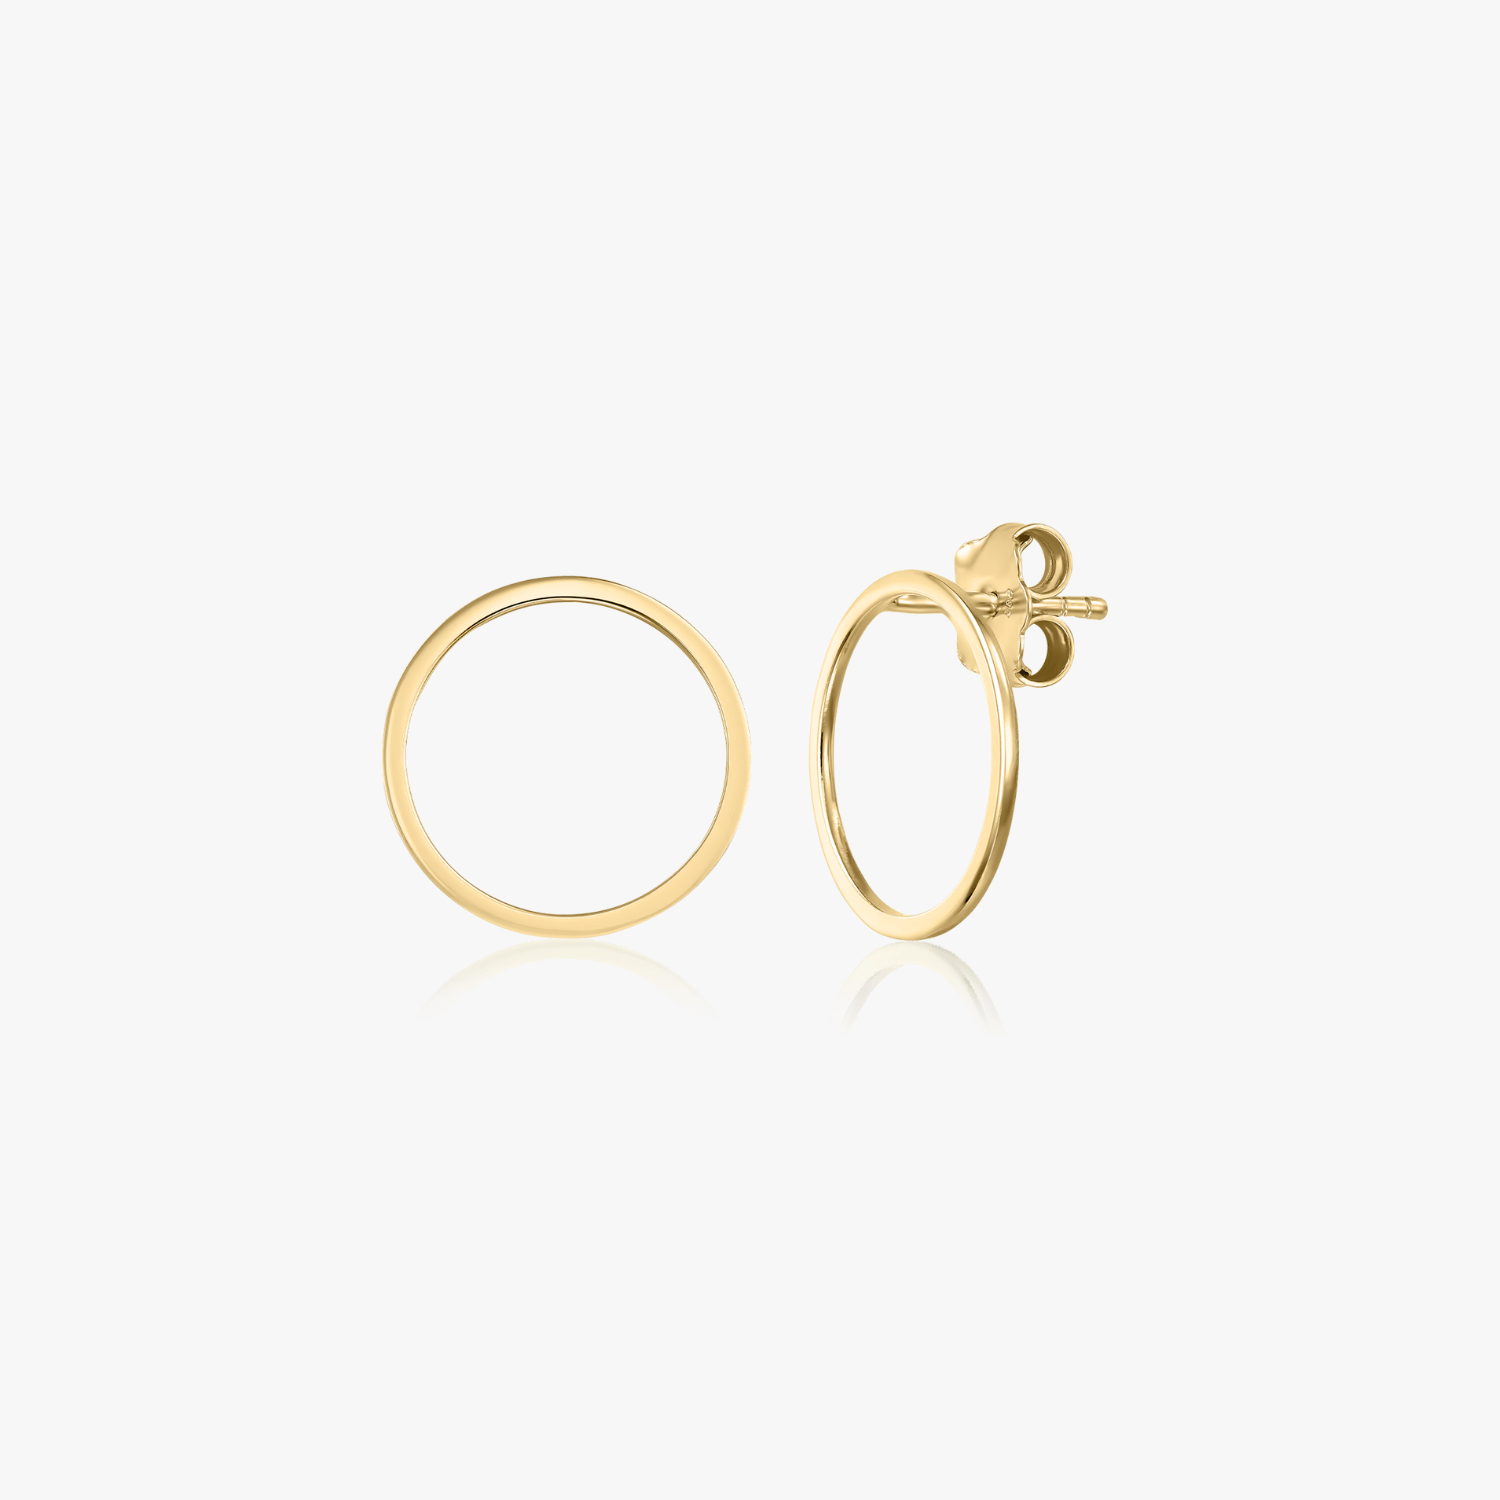 Circle gold earrings